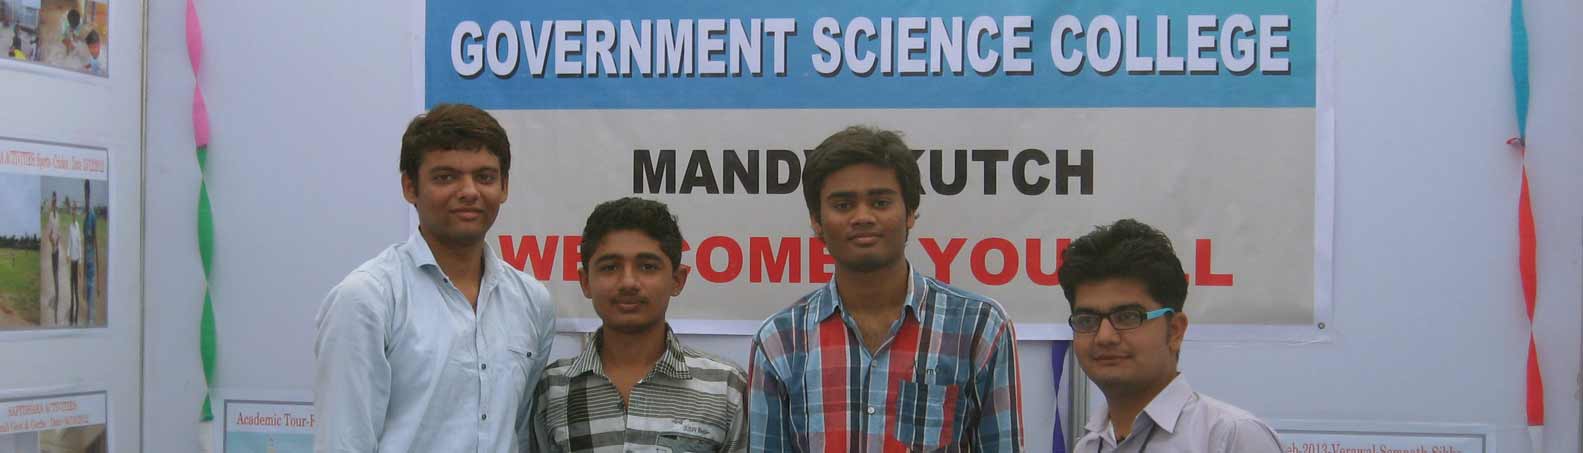 Government Science College, Mandvi Image